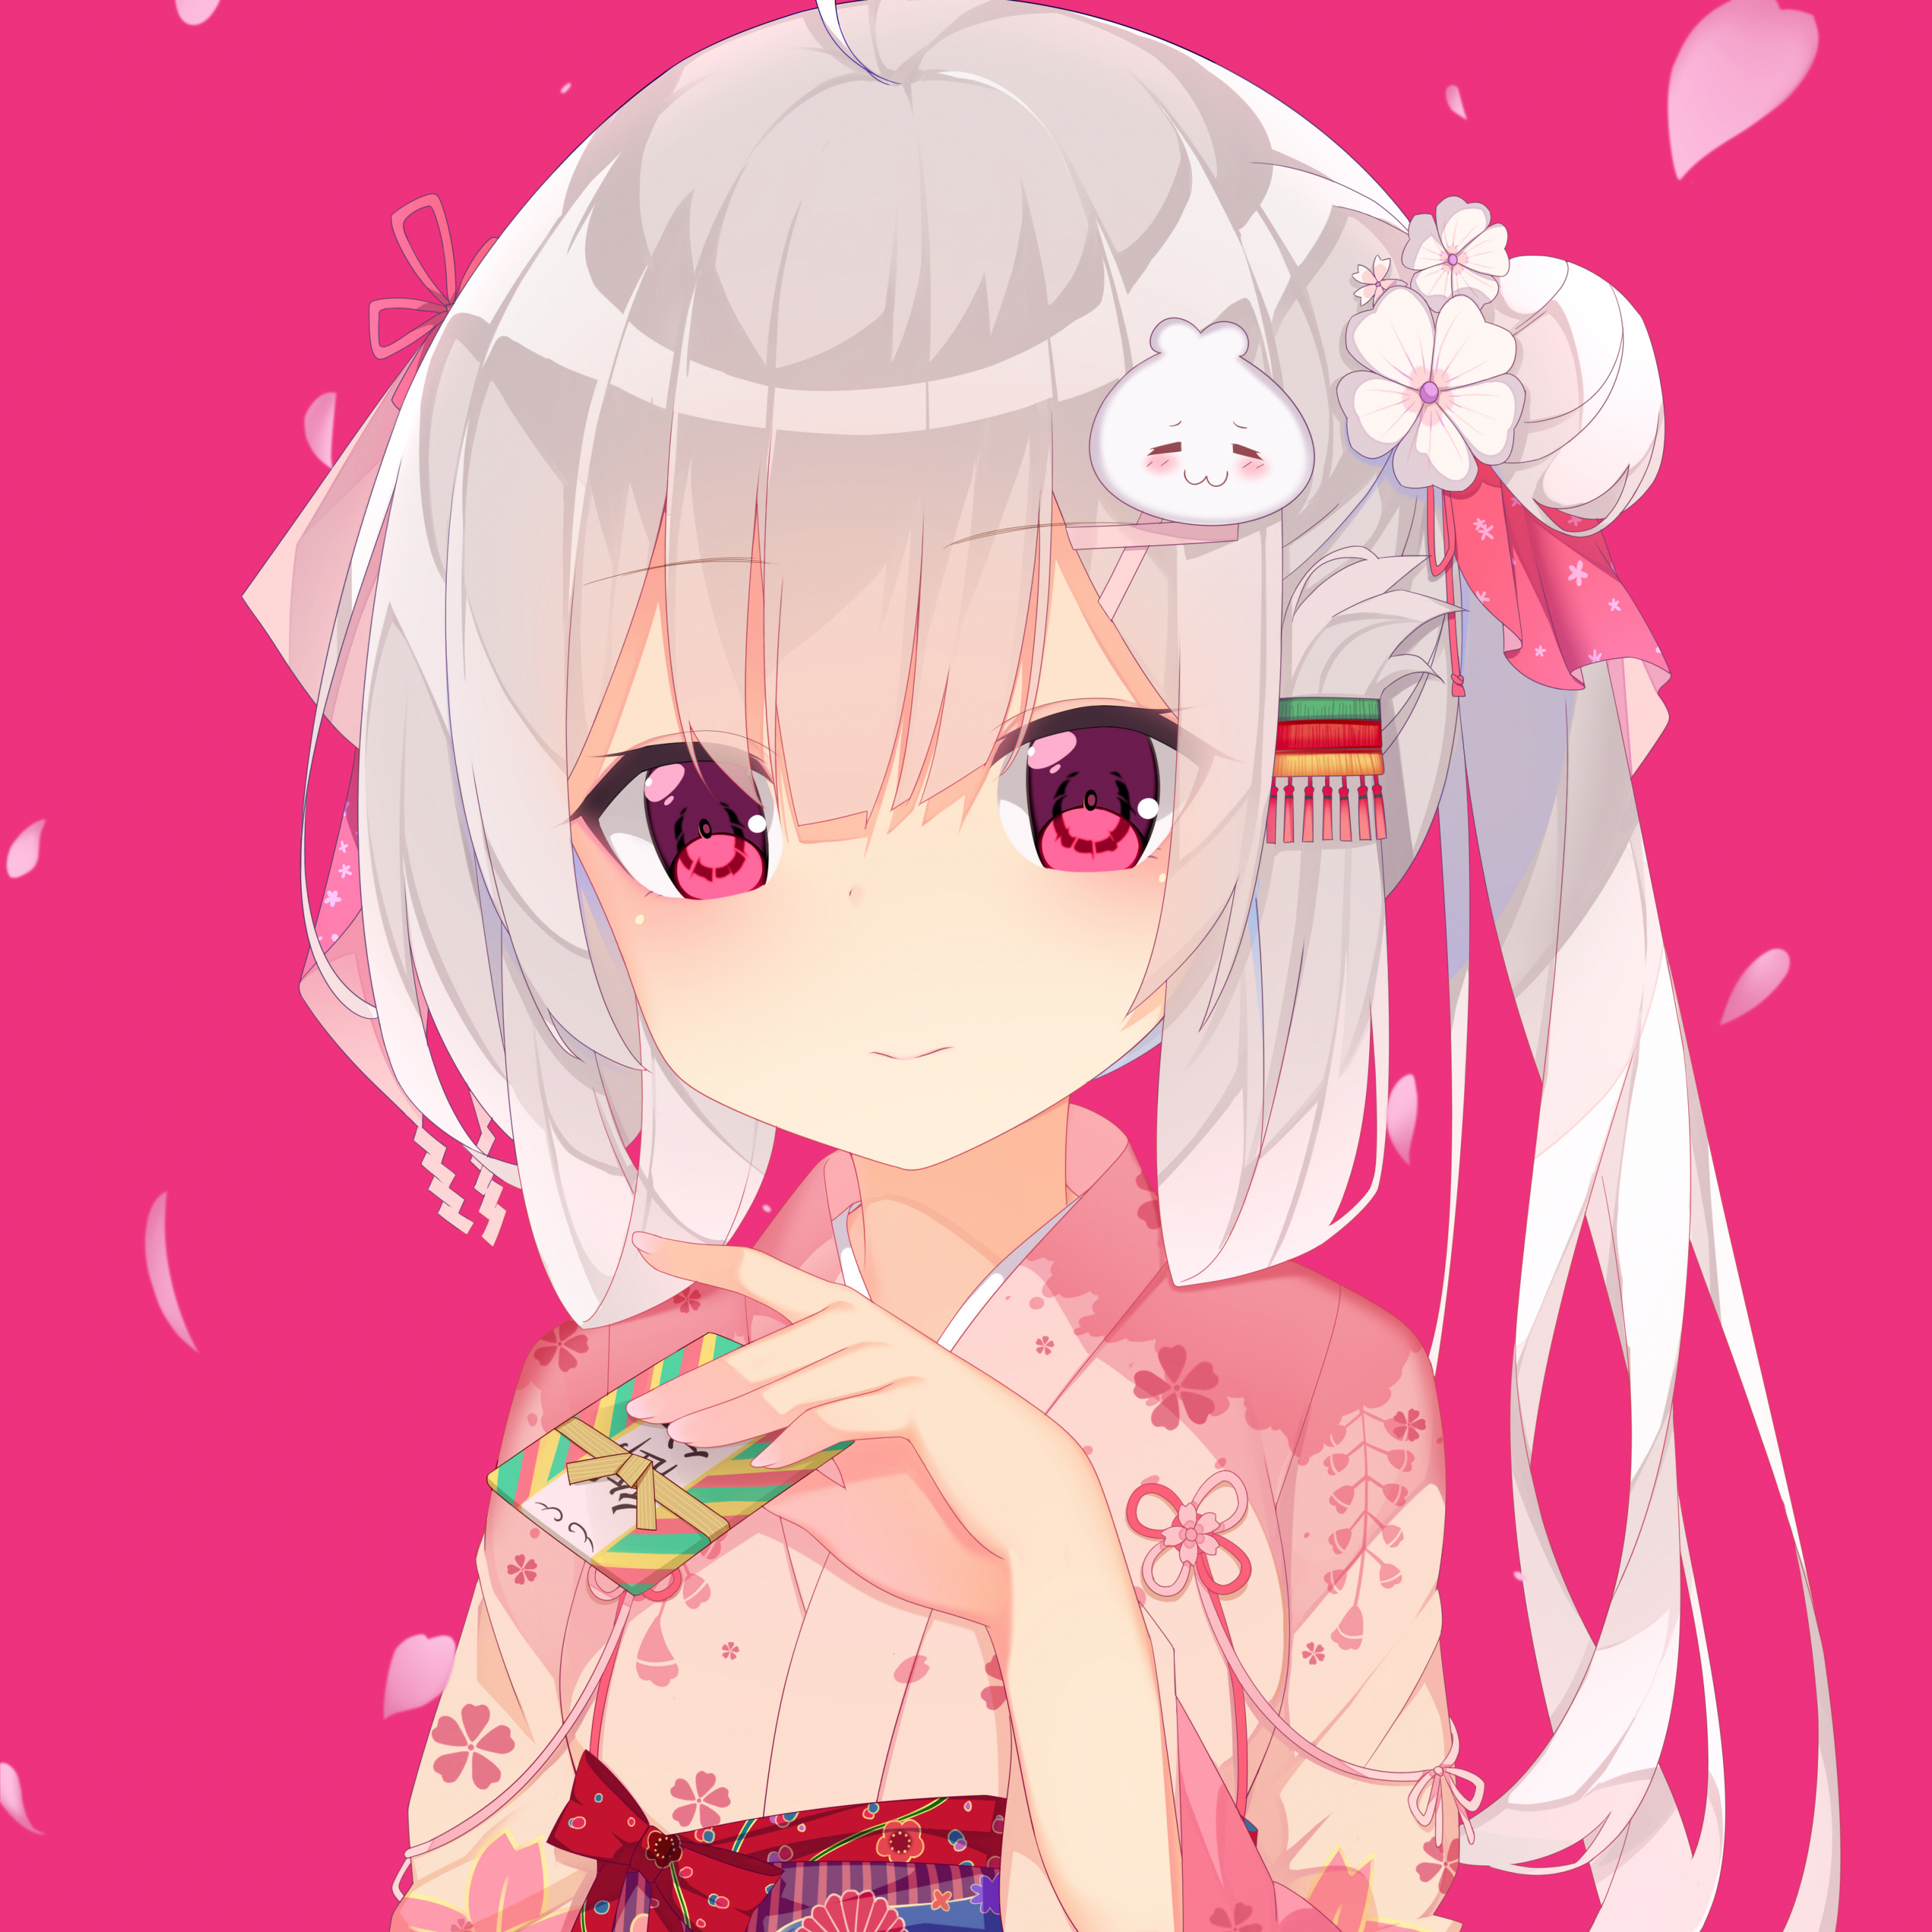 Download traditional dress, original, anime girl 2932x2932 wallpaper, ipad pro retina, 2932x2932 image, background, 4375